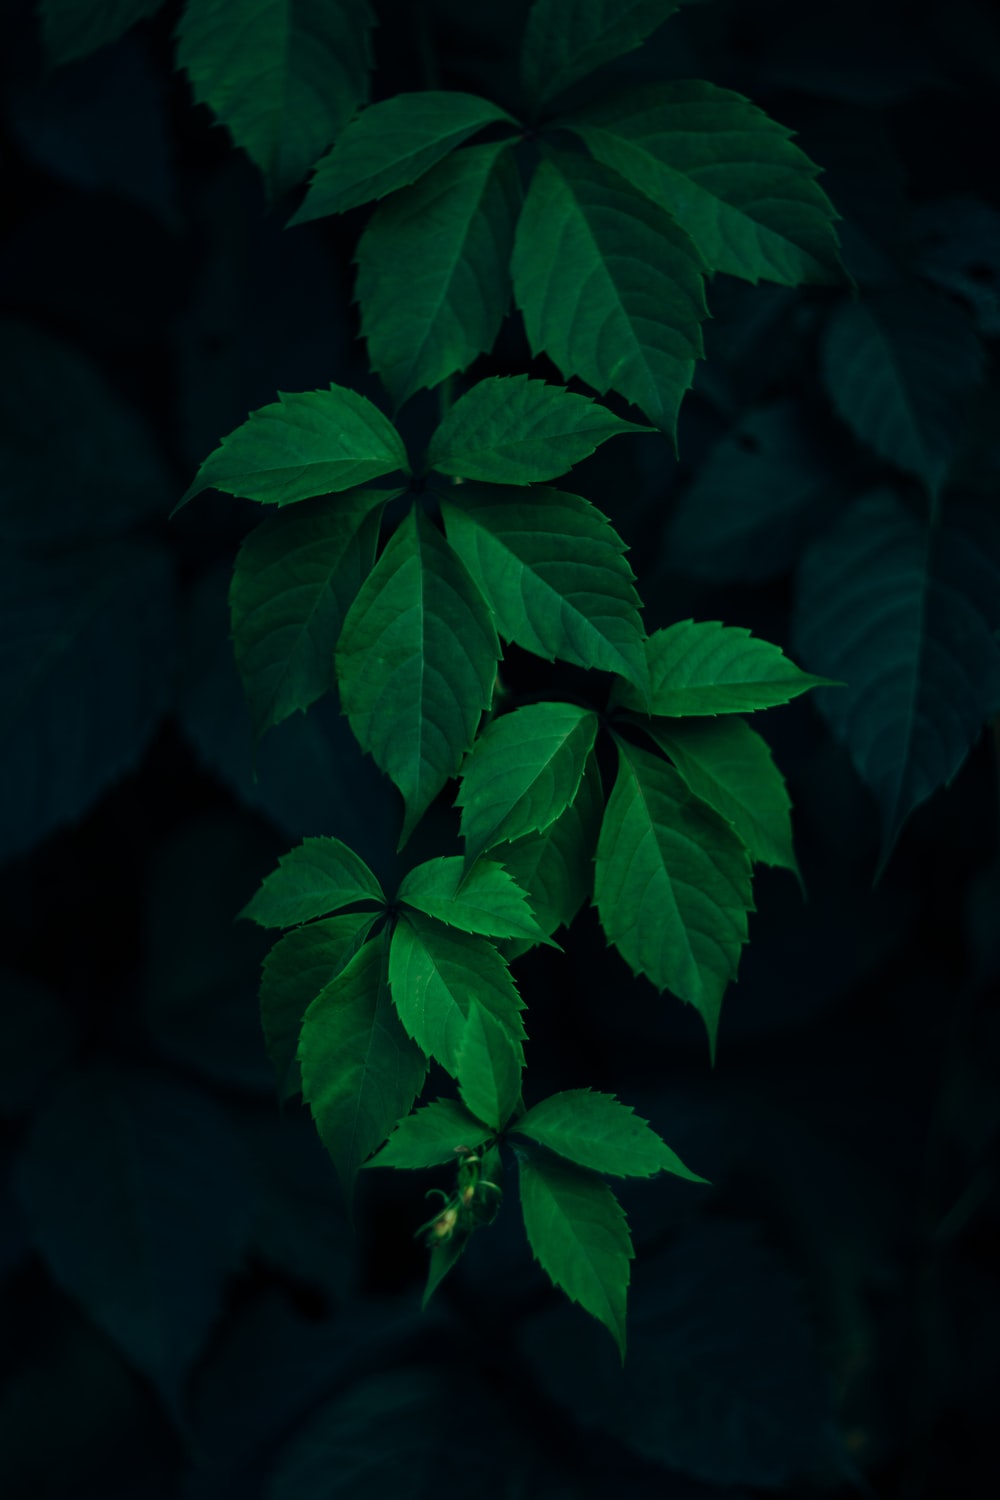 Dark Leaf Picture. Download Free Image